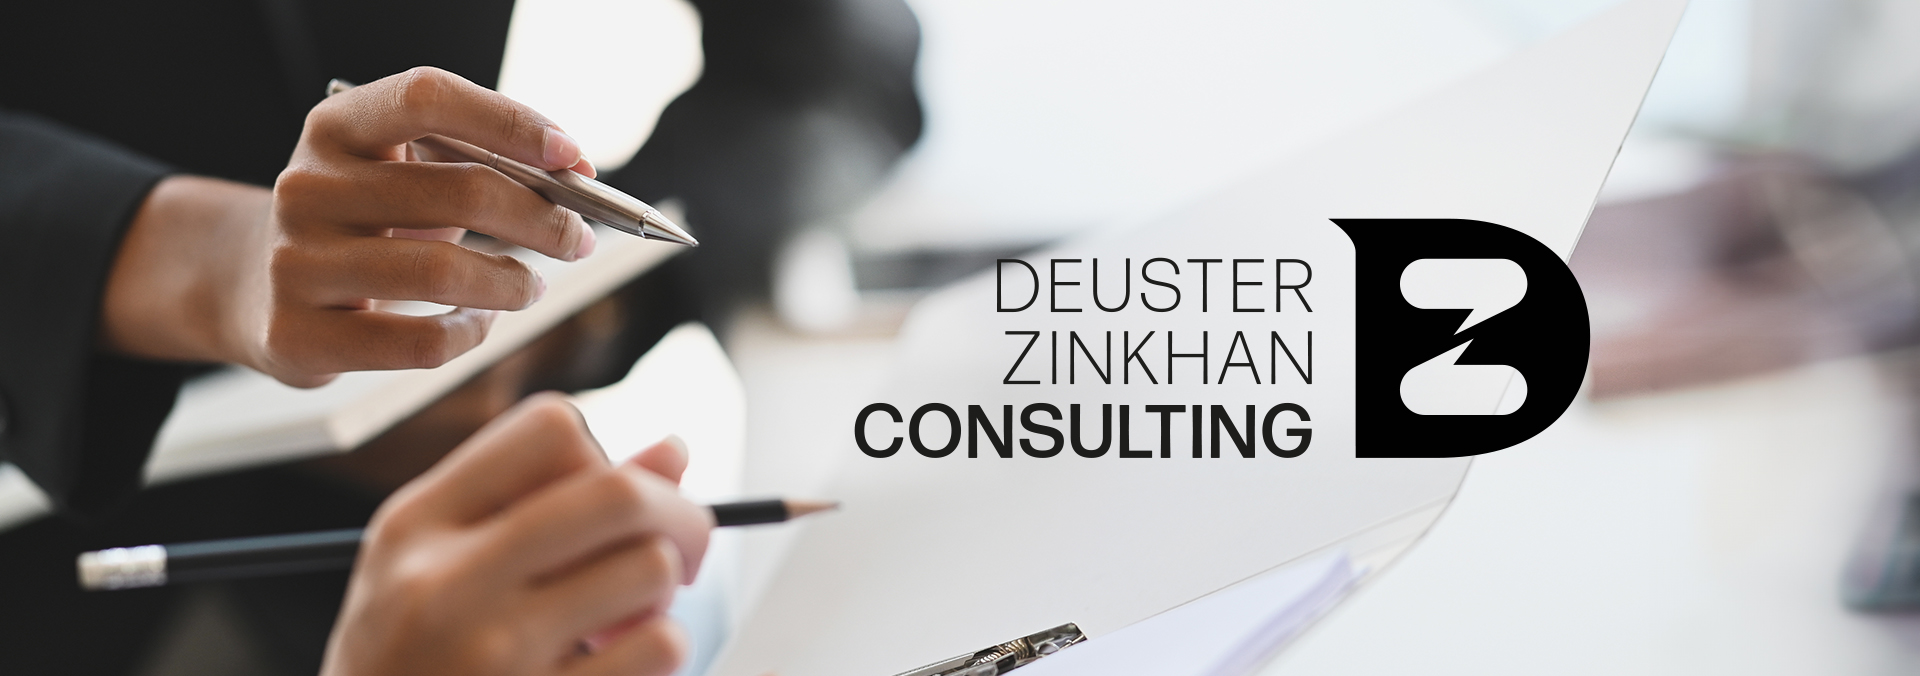 Deuster Zinkhan Consulting Logo (Design) 